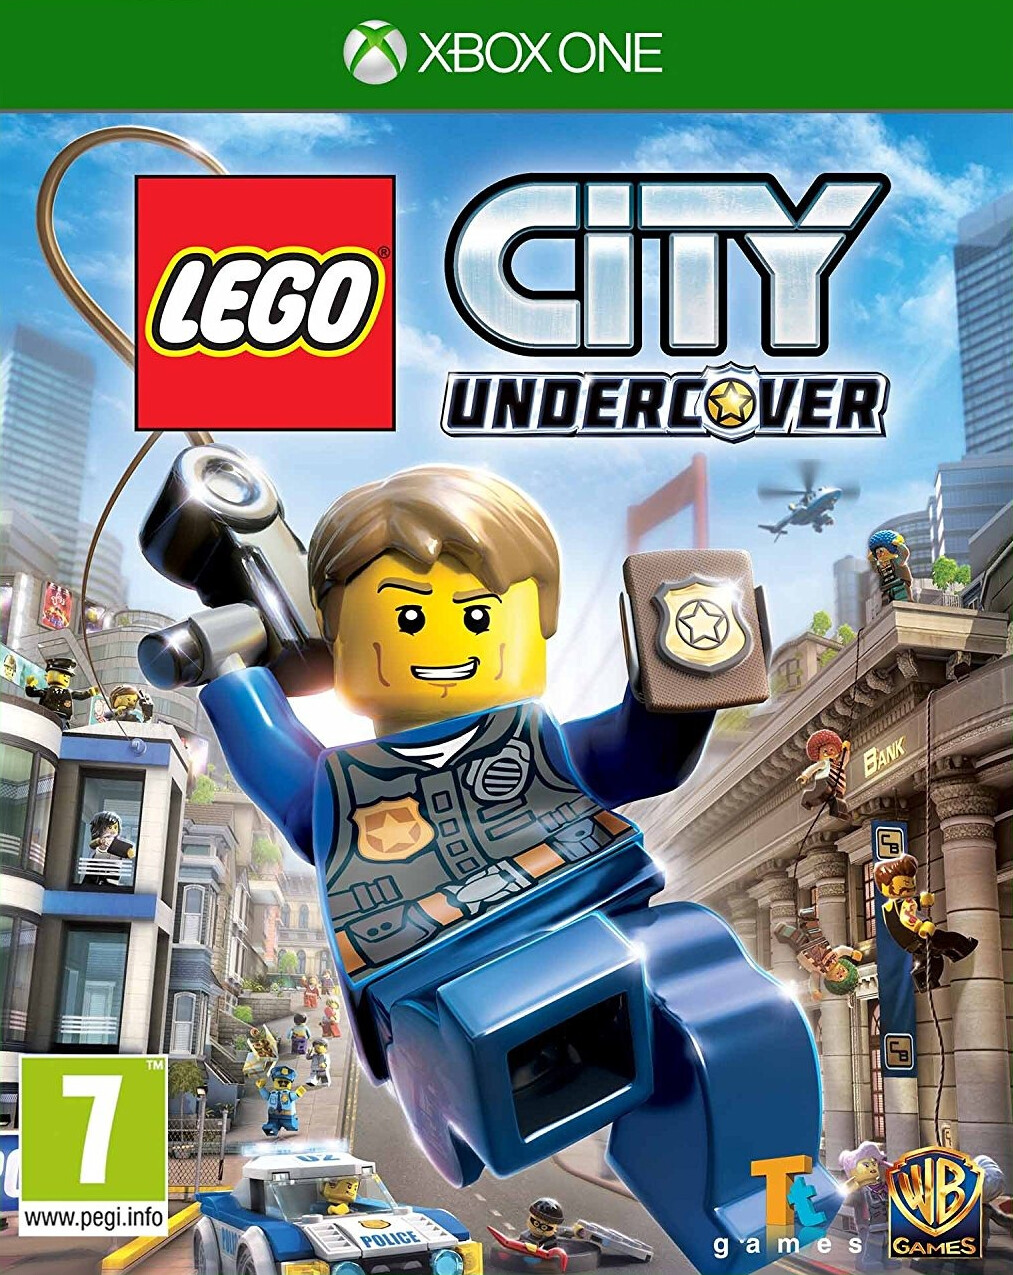 Photos - Game Warner Bros LEGO City: Undercover (Xbox One)